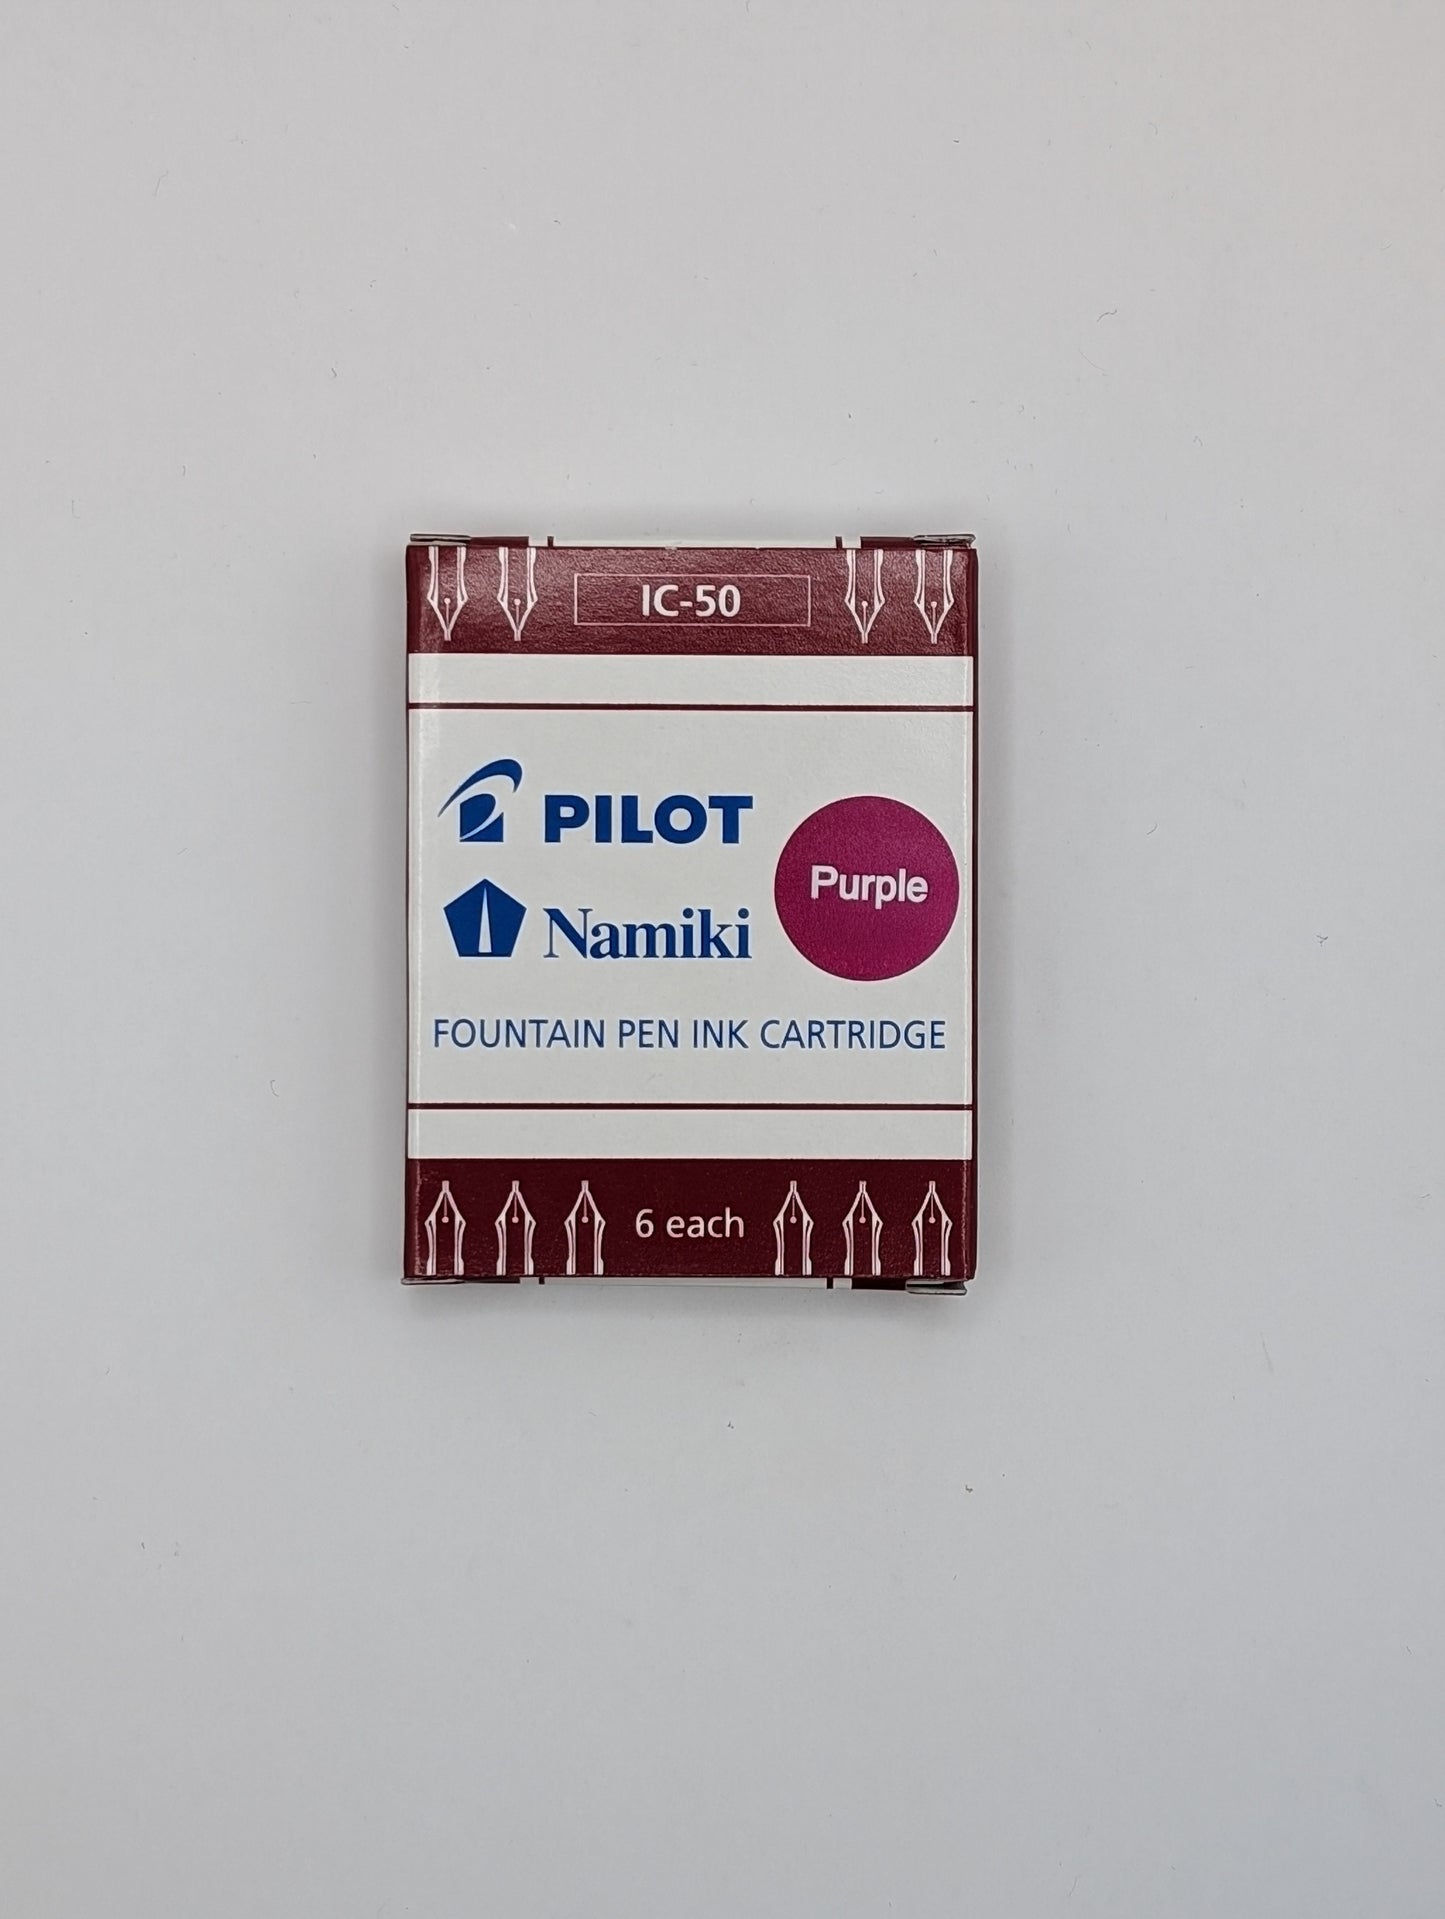 Pilot Namiki IC-50 Fountain Pen Ink Cartridge 6pk